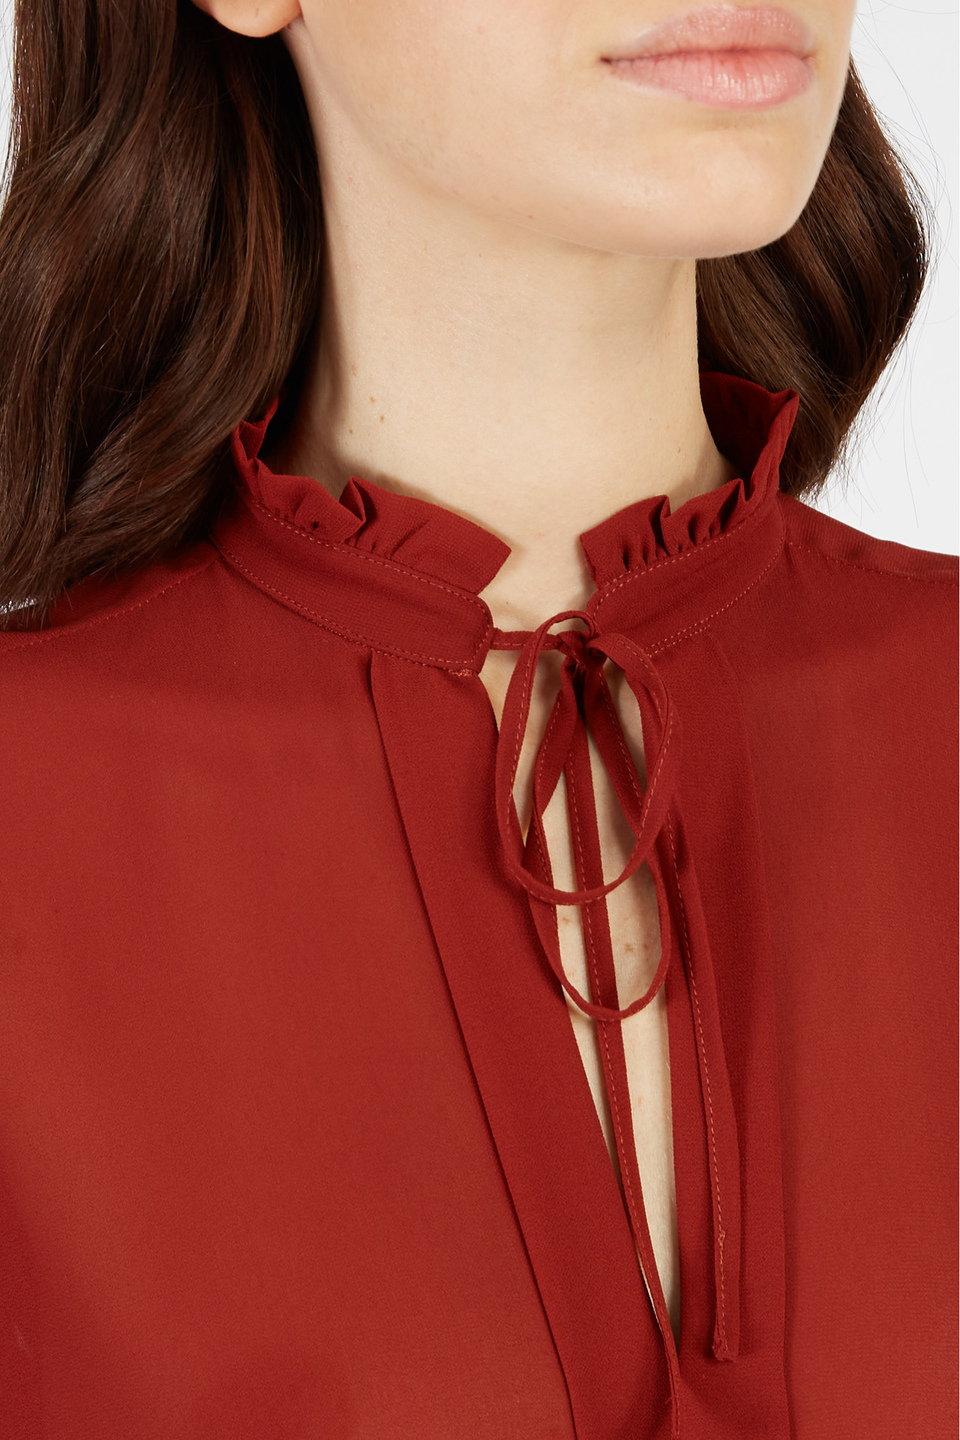 Women’s shirt Argentina fabric georgette regular fit long sleeves | La Martina - Official Online Shop